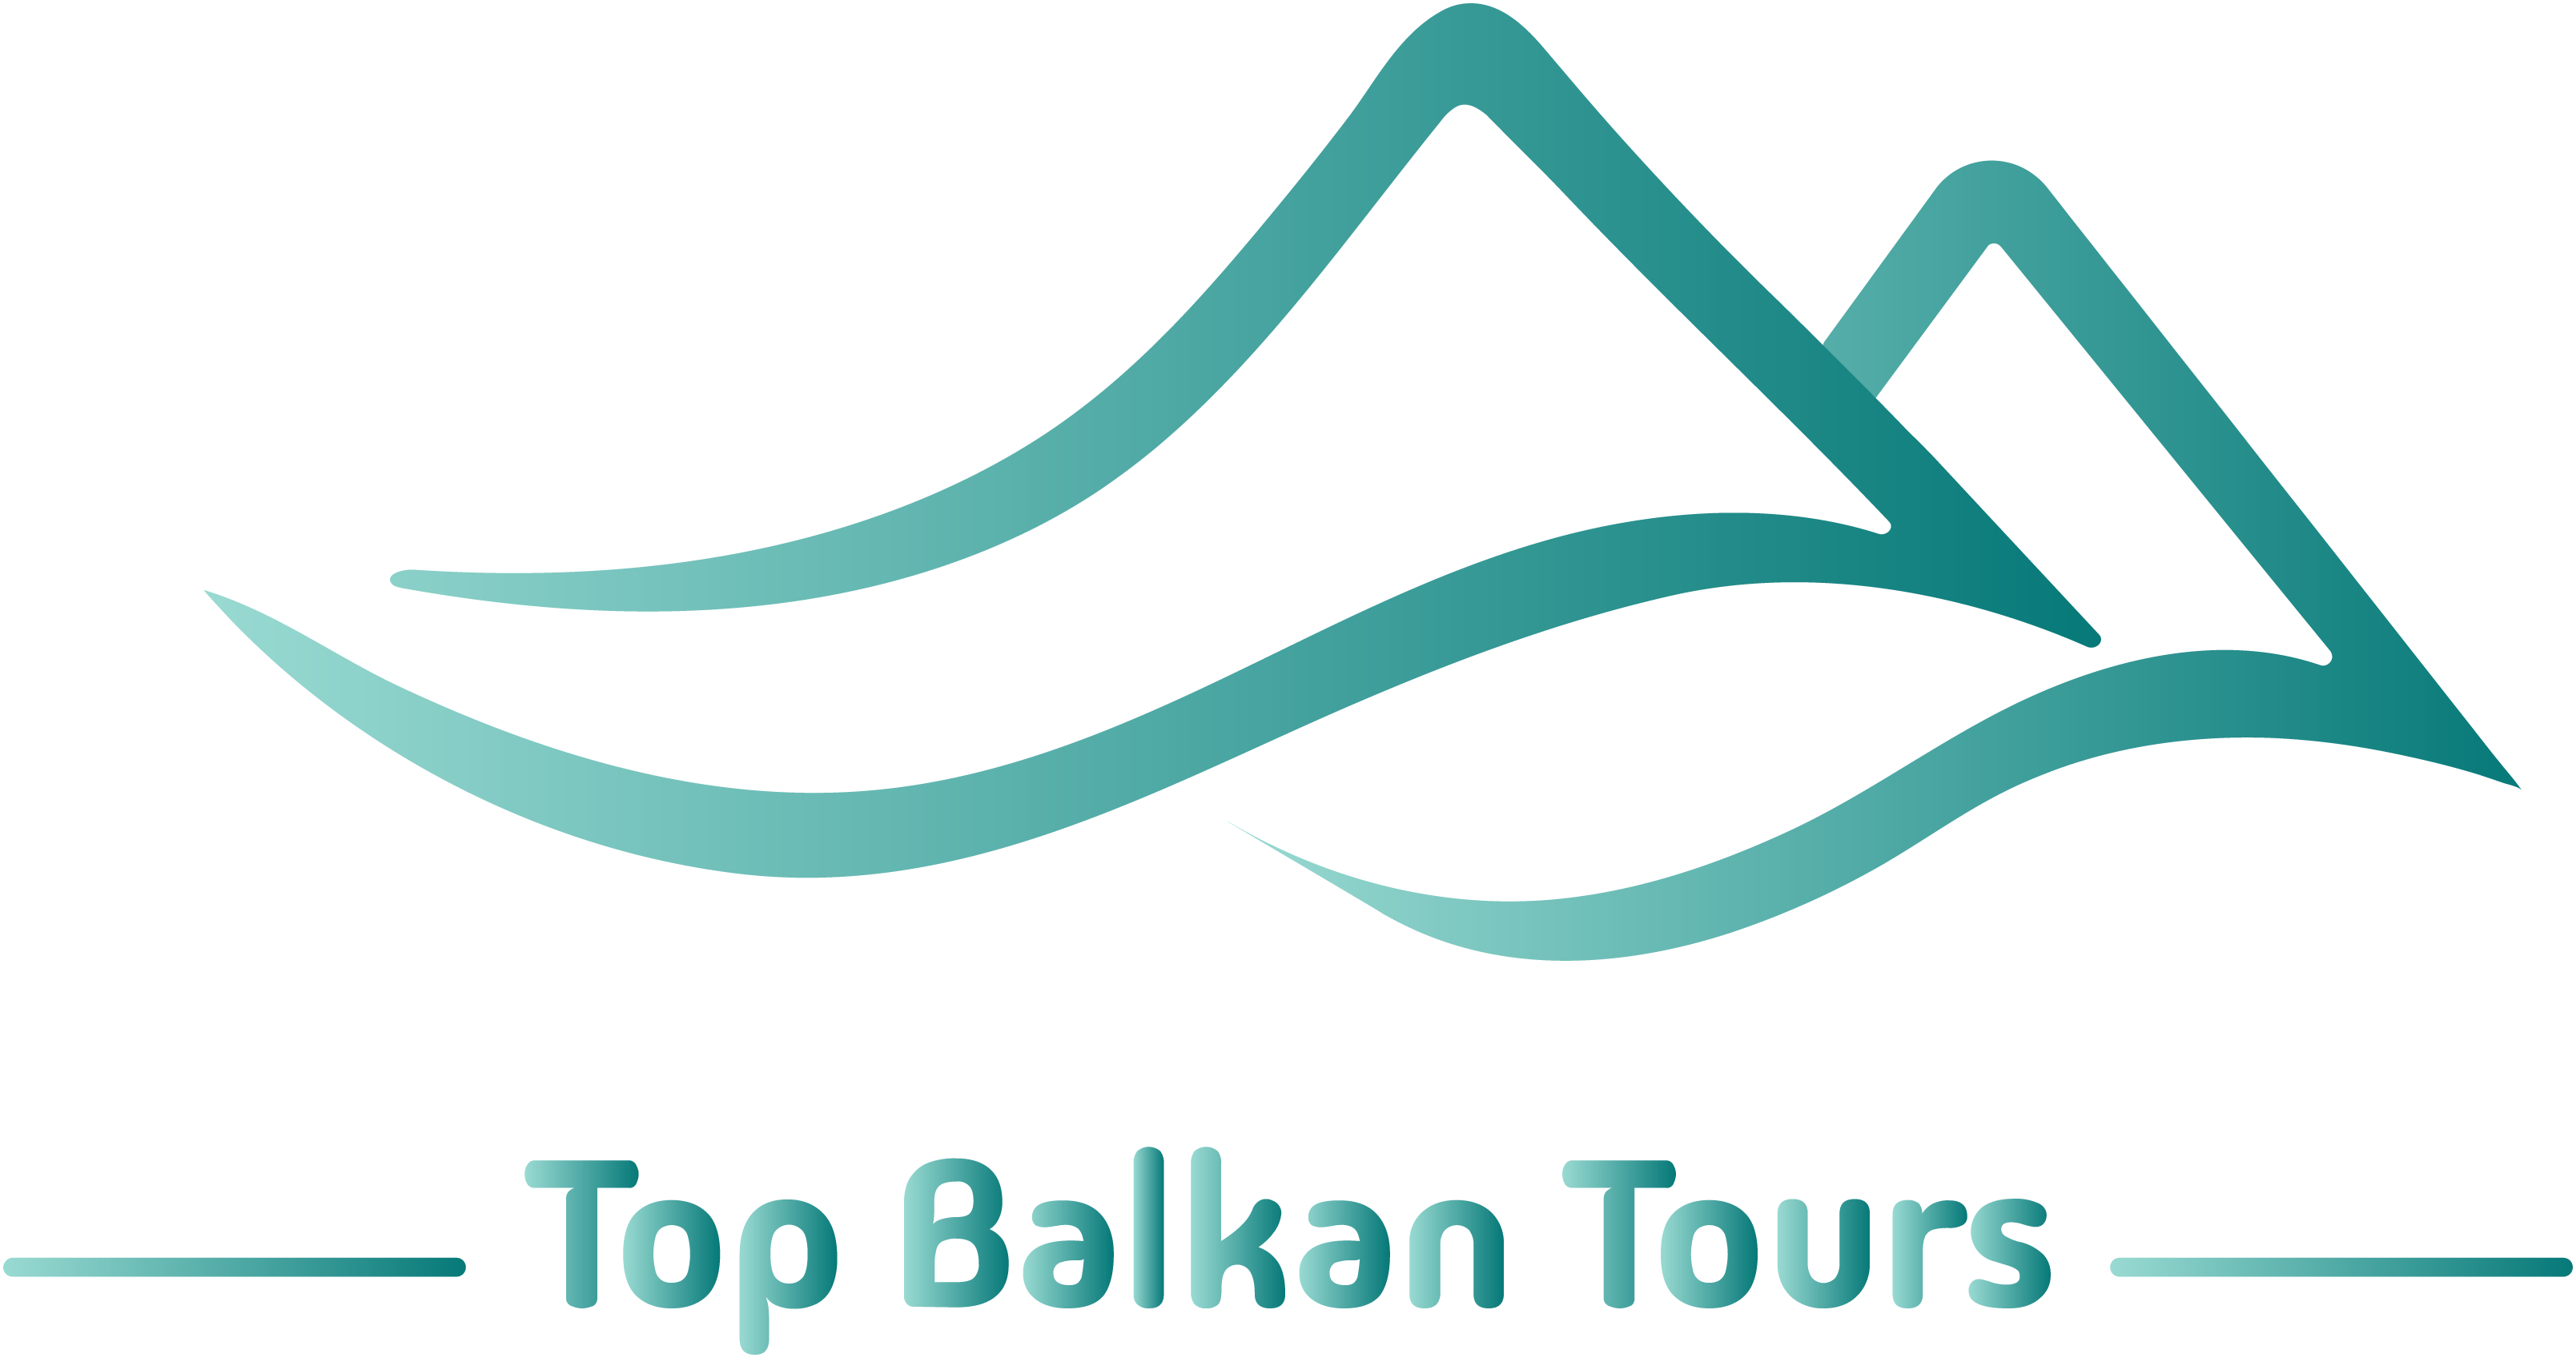 My Top Balkan Tours Blog